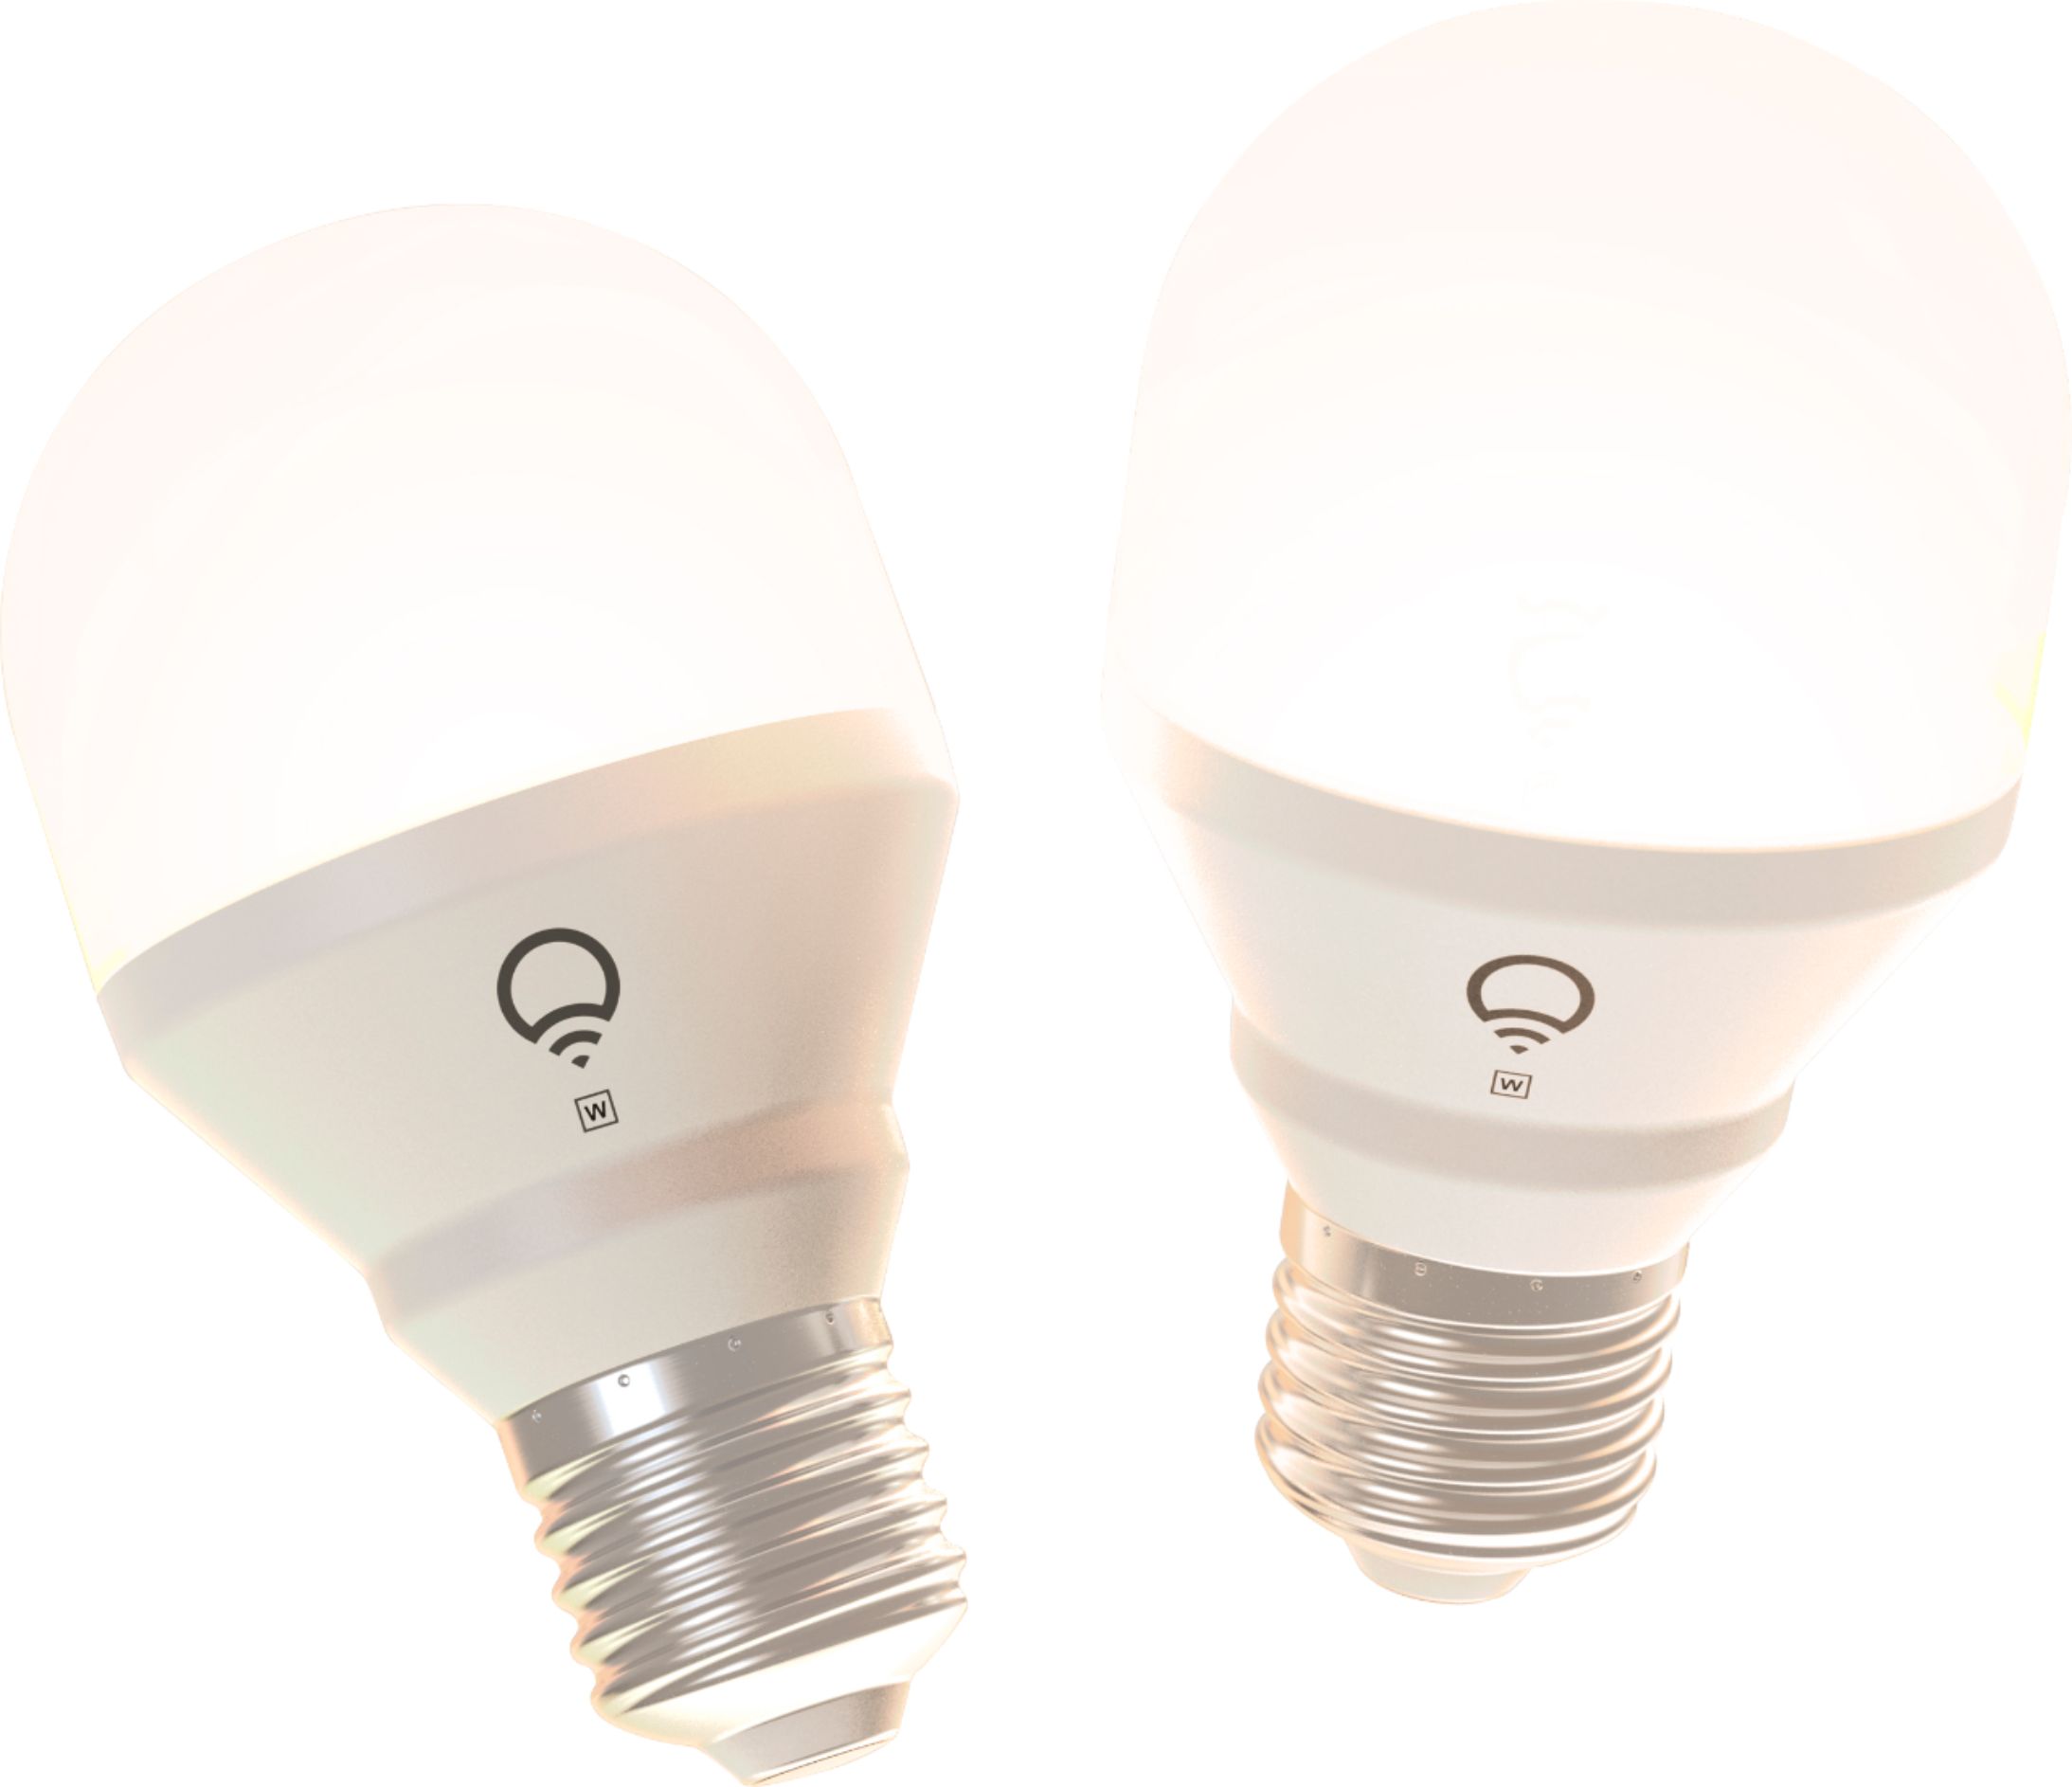 LIFX A19 White Wi-Fi Smart LED Light Bulb L3A19LW06E26CA NEW SEALED 